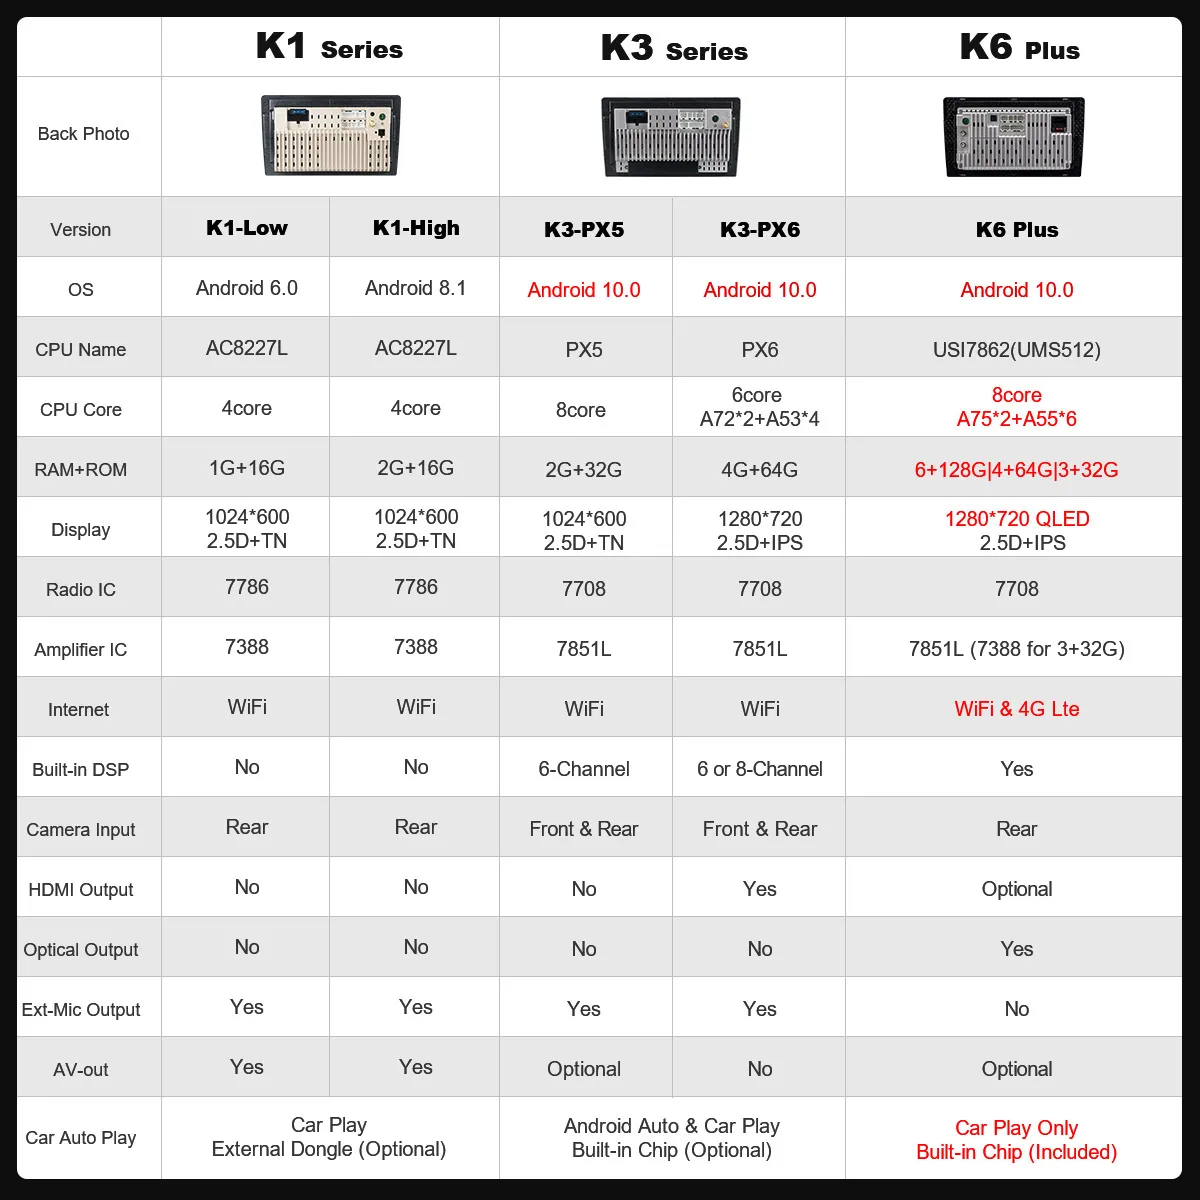 Ownice Android 10.0 8 Core Avto DVD Stereo Za Chevrolet Captiva 2011 - 2017 Radio, GPS Navi Multimedia Audio DSP 4G SPDIF 6 G+128G